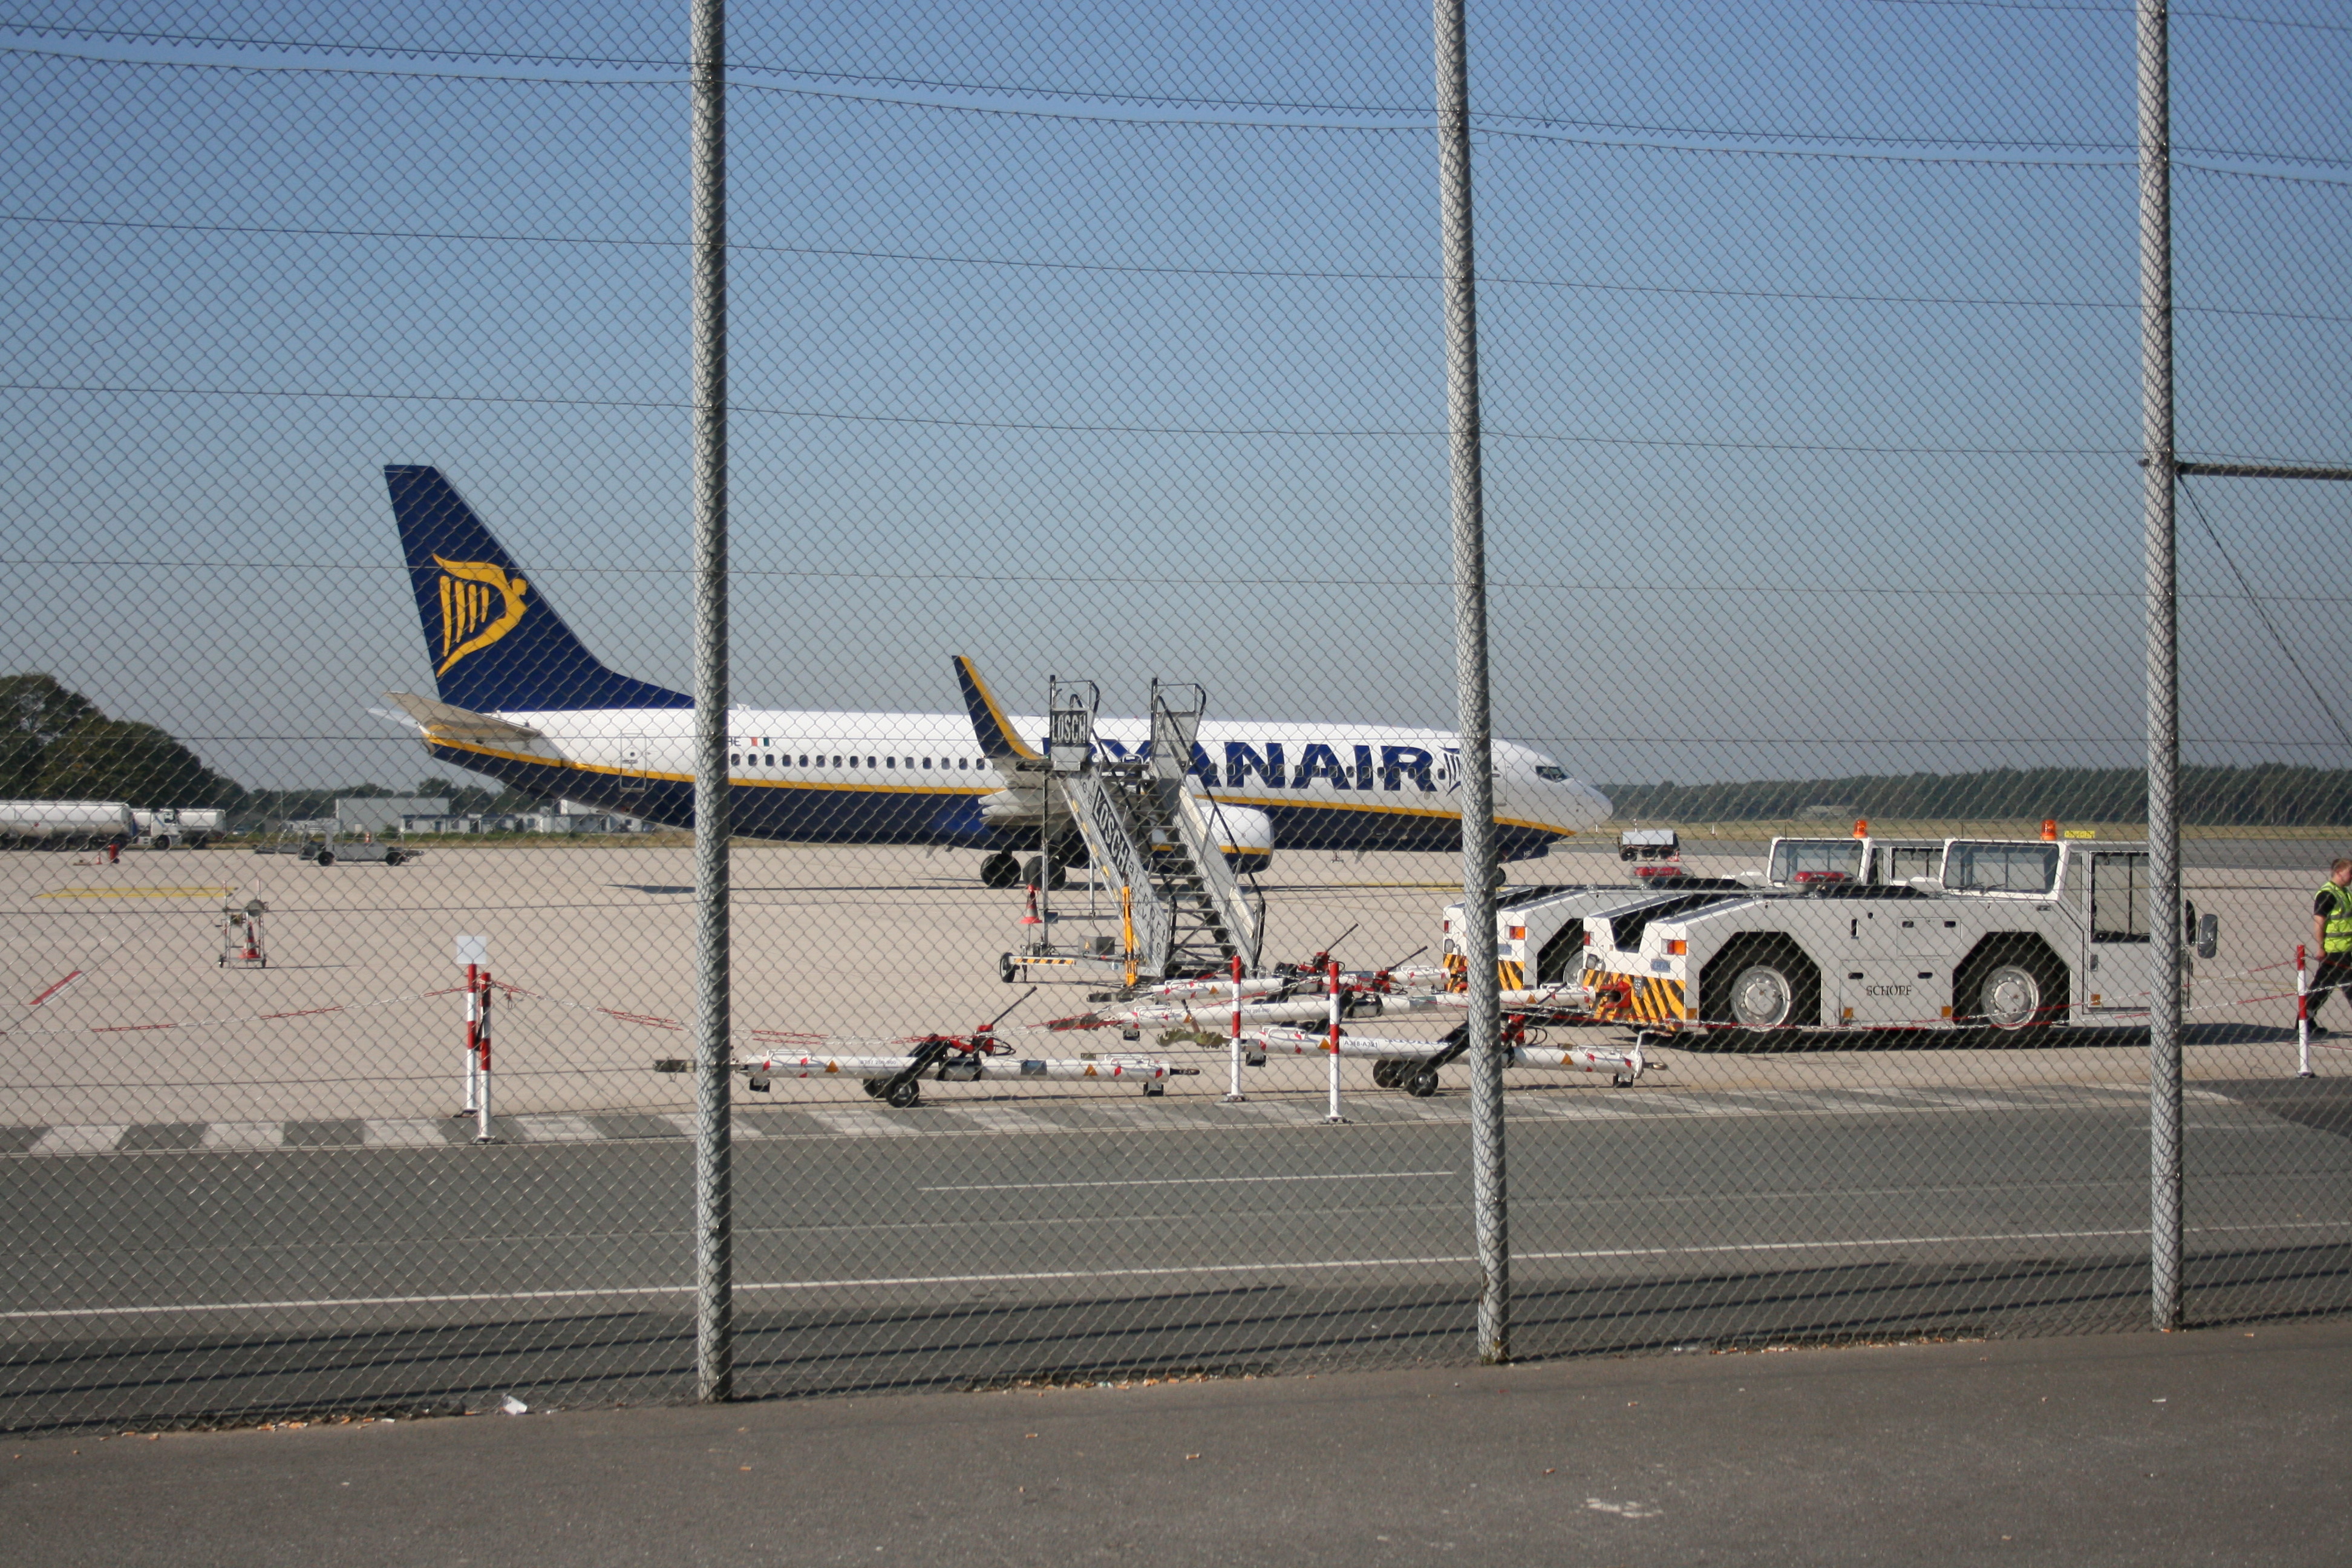 Международный аэропорт франкфурта-на-майне: описание, услуги